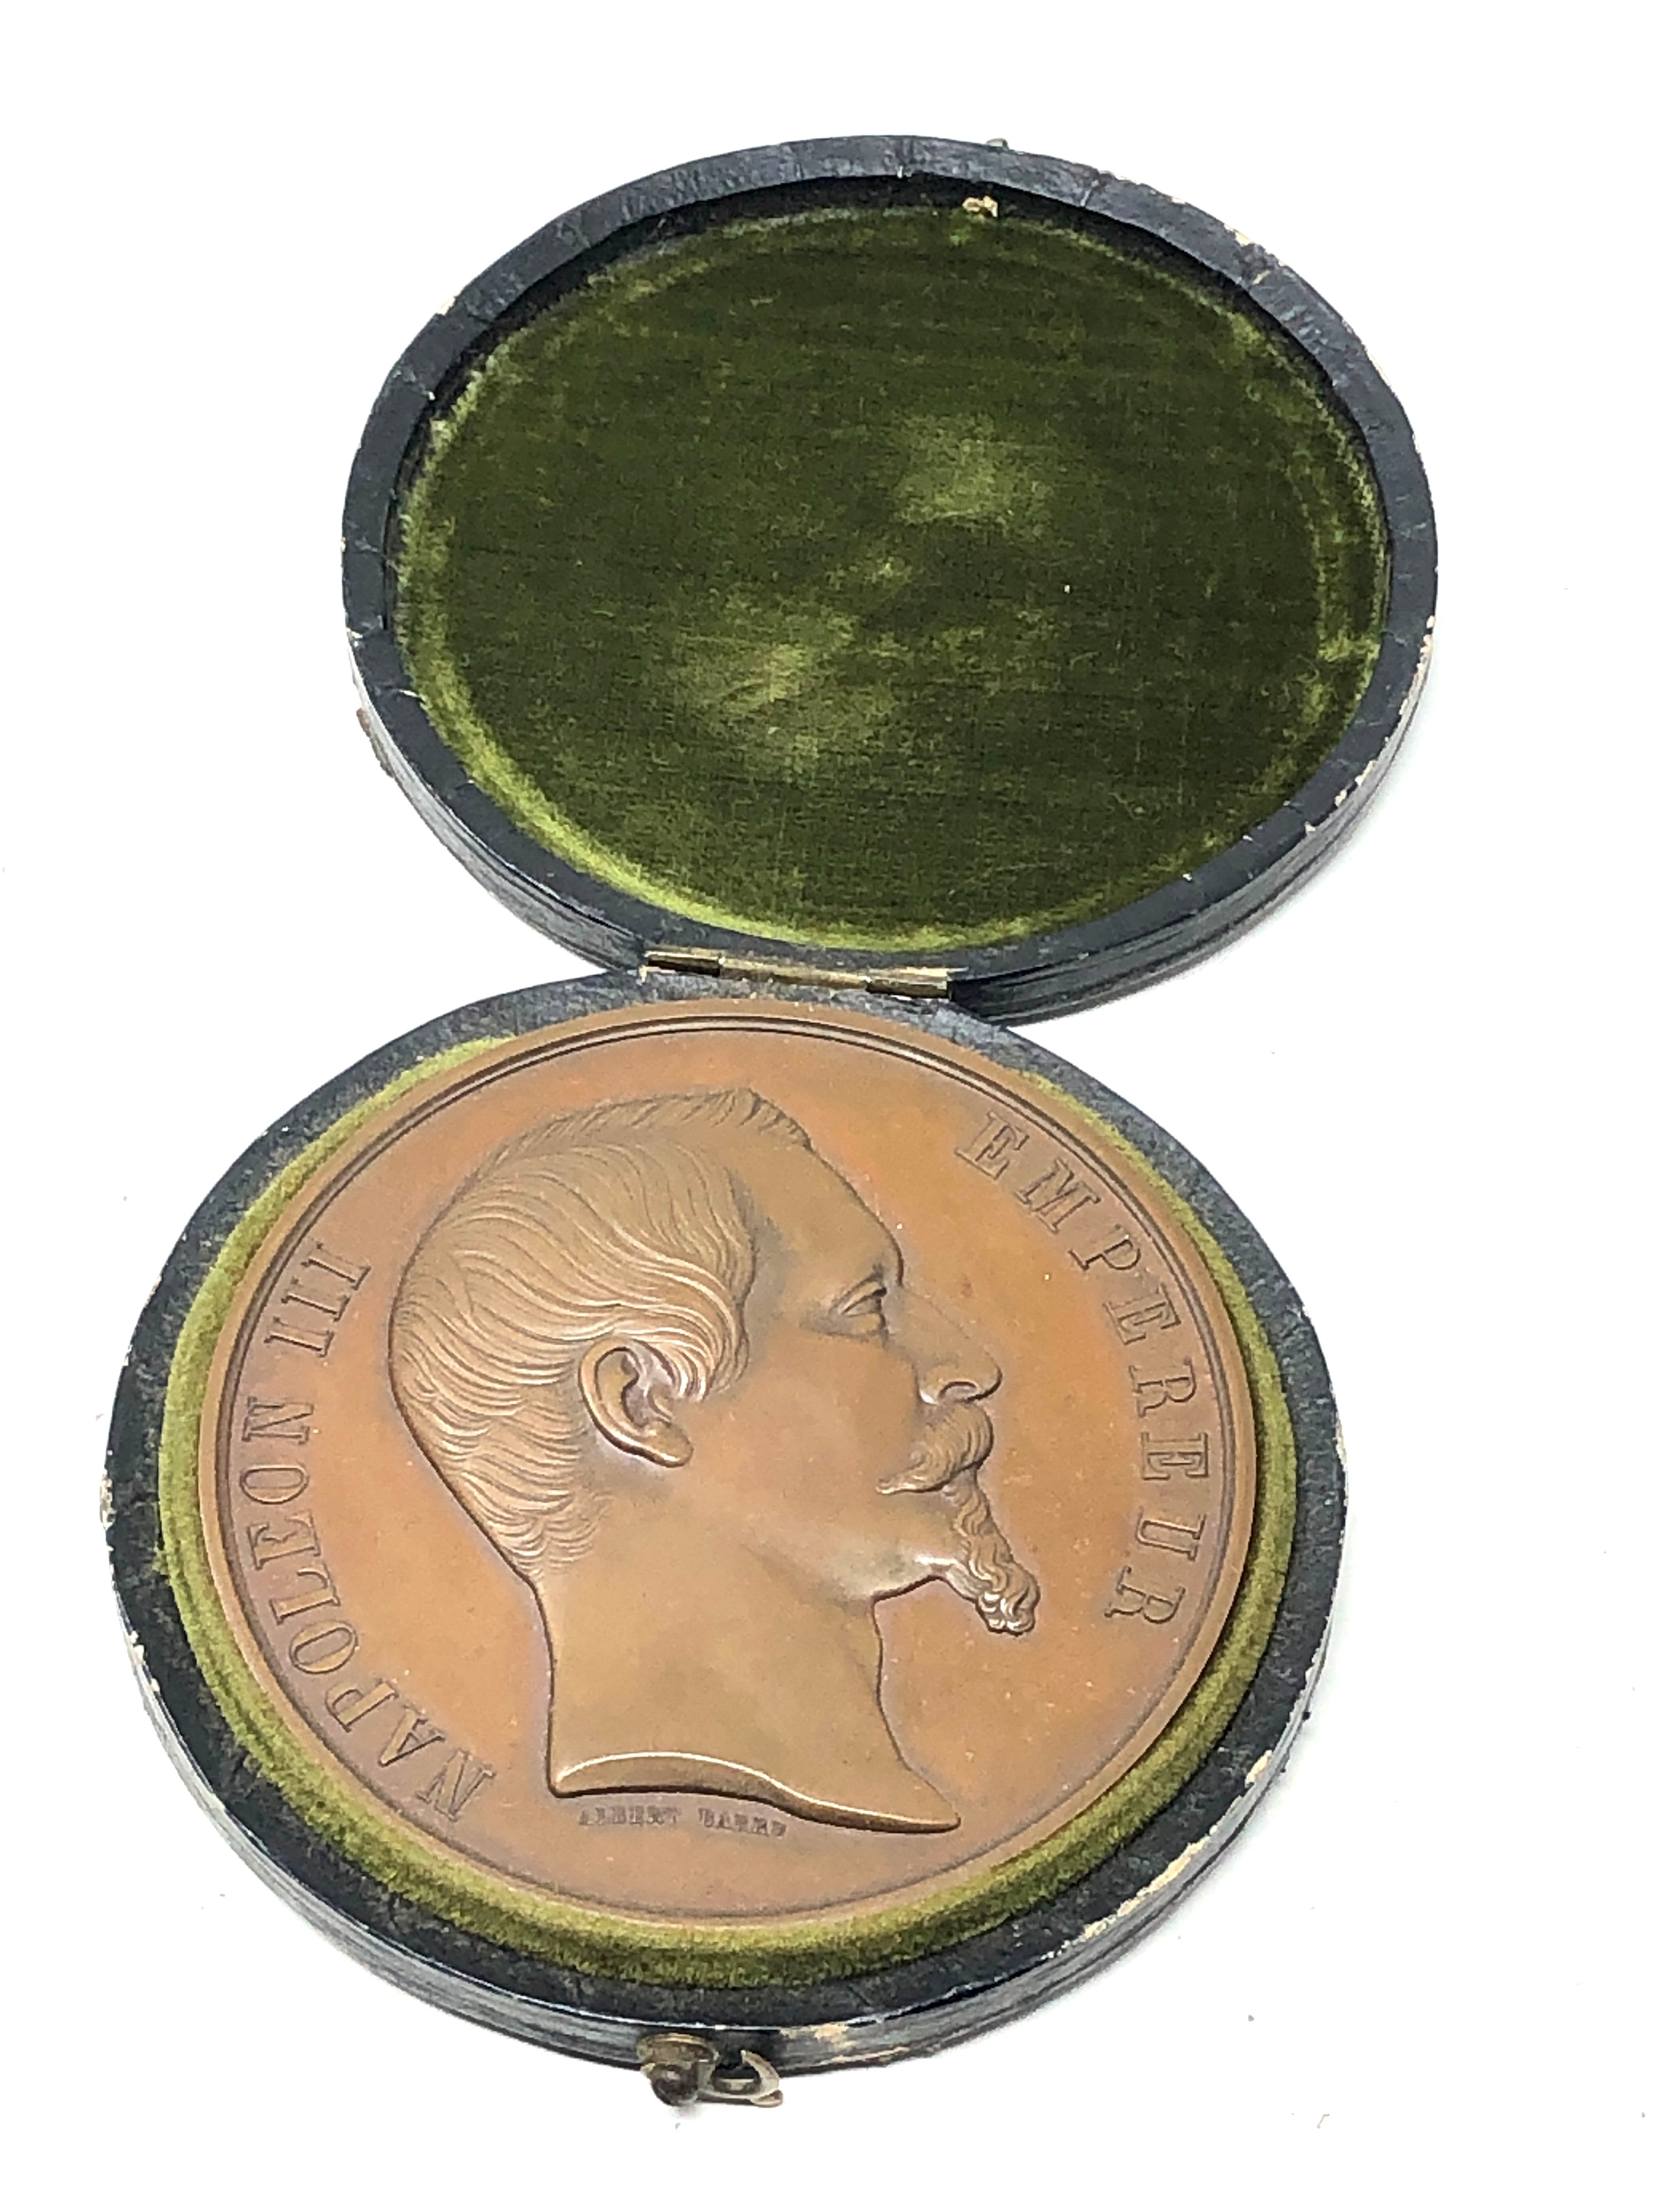 1855 bronze napoleon 111 exposition medal original box - Image 2 of 3